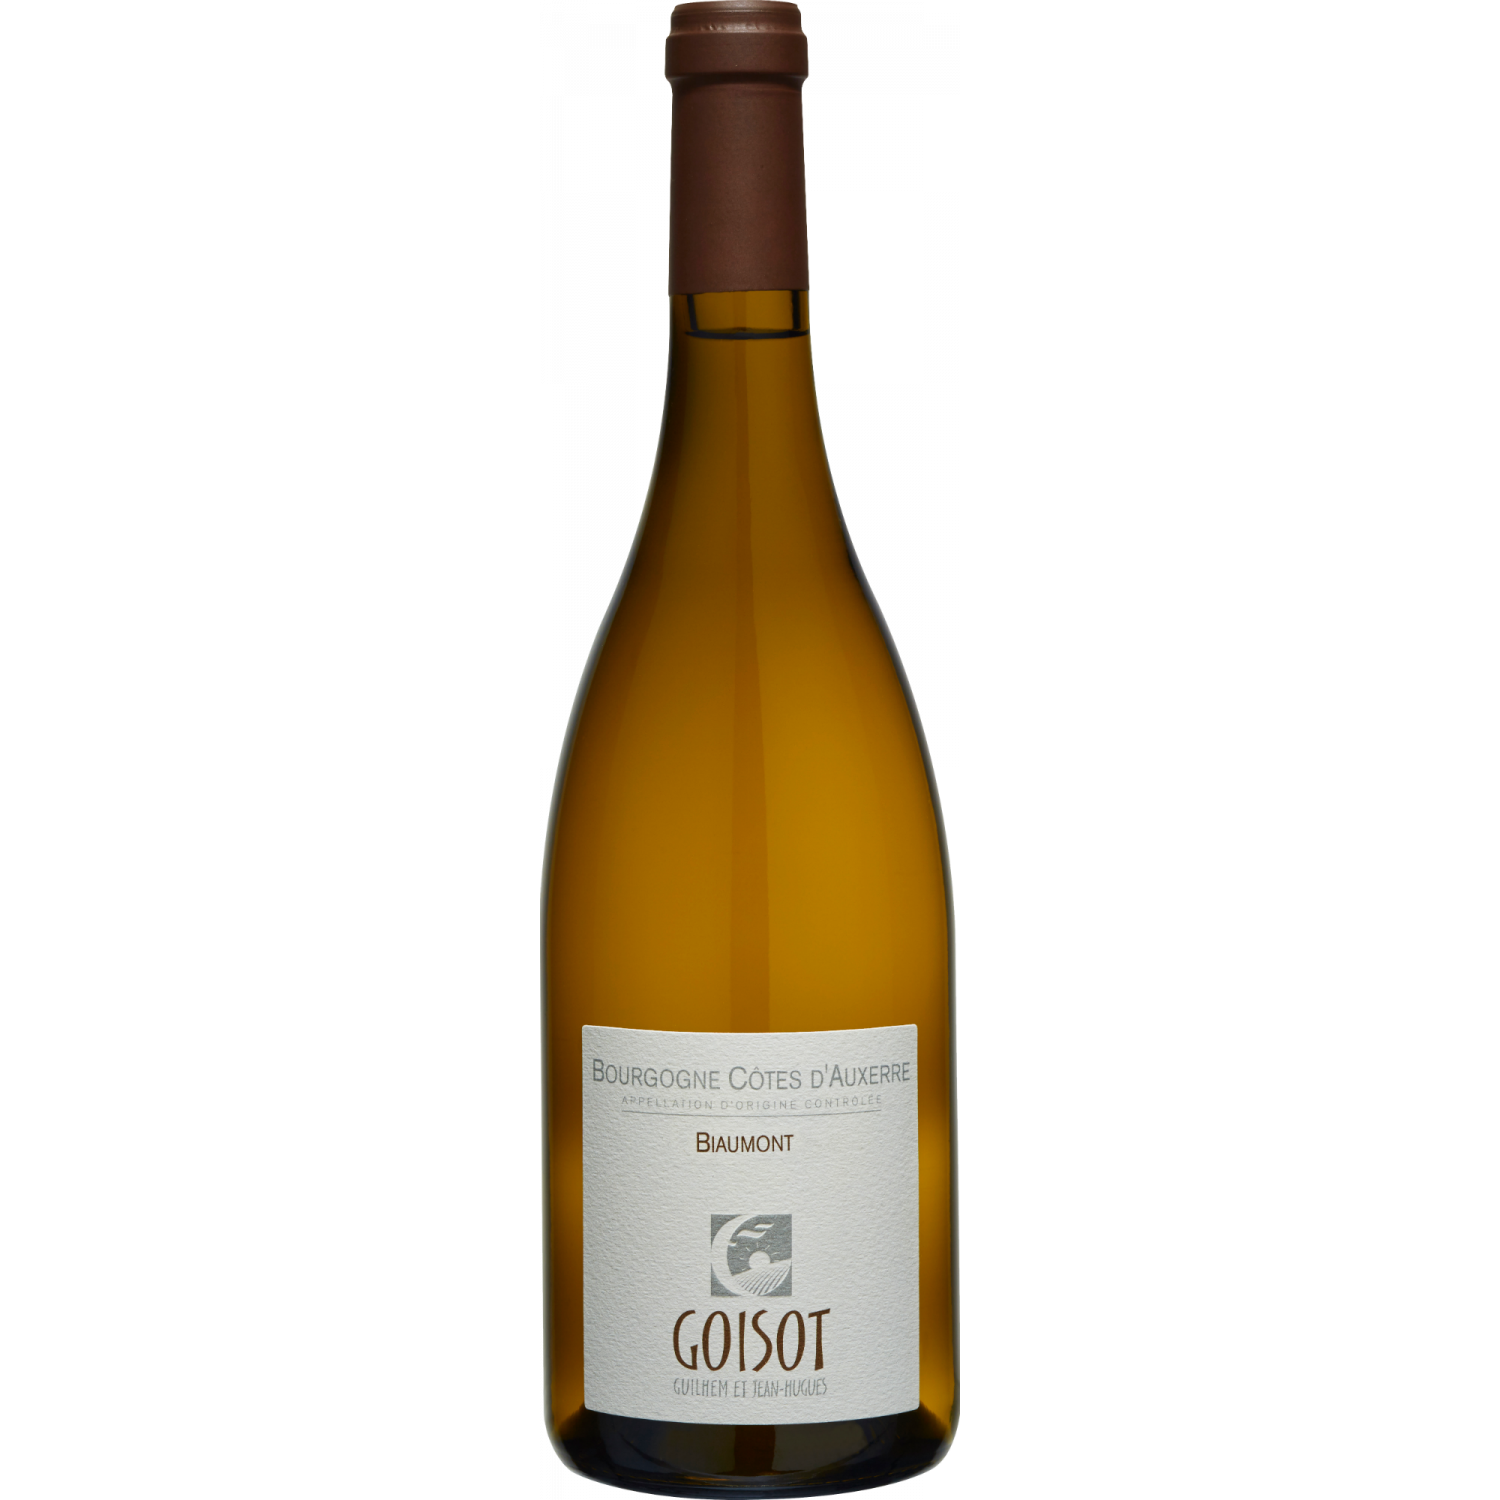 2009 Bourgogne Chardonnay 'Biaumont', Domaine Goisot